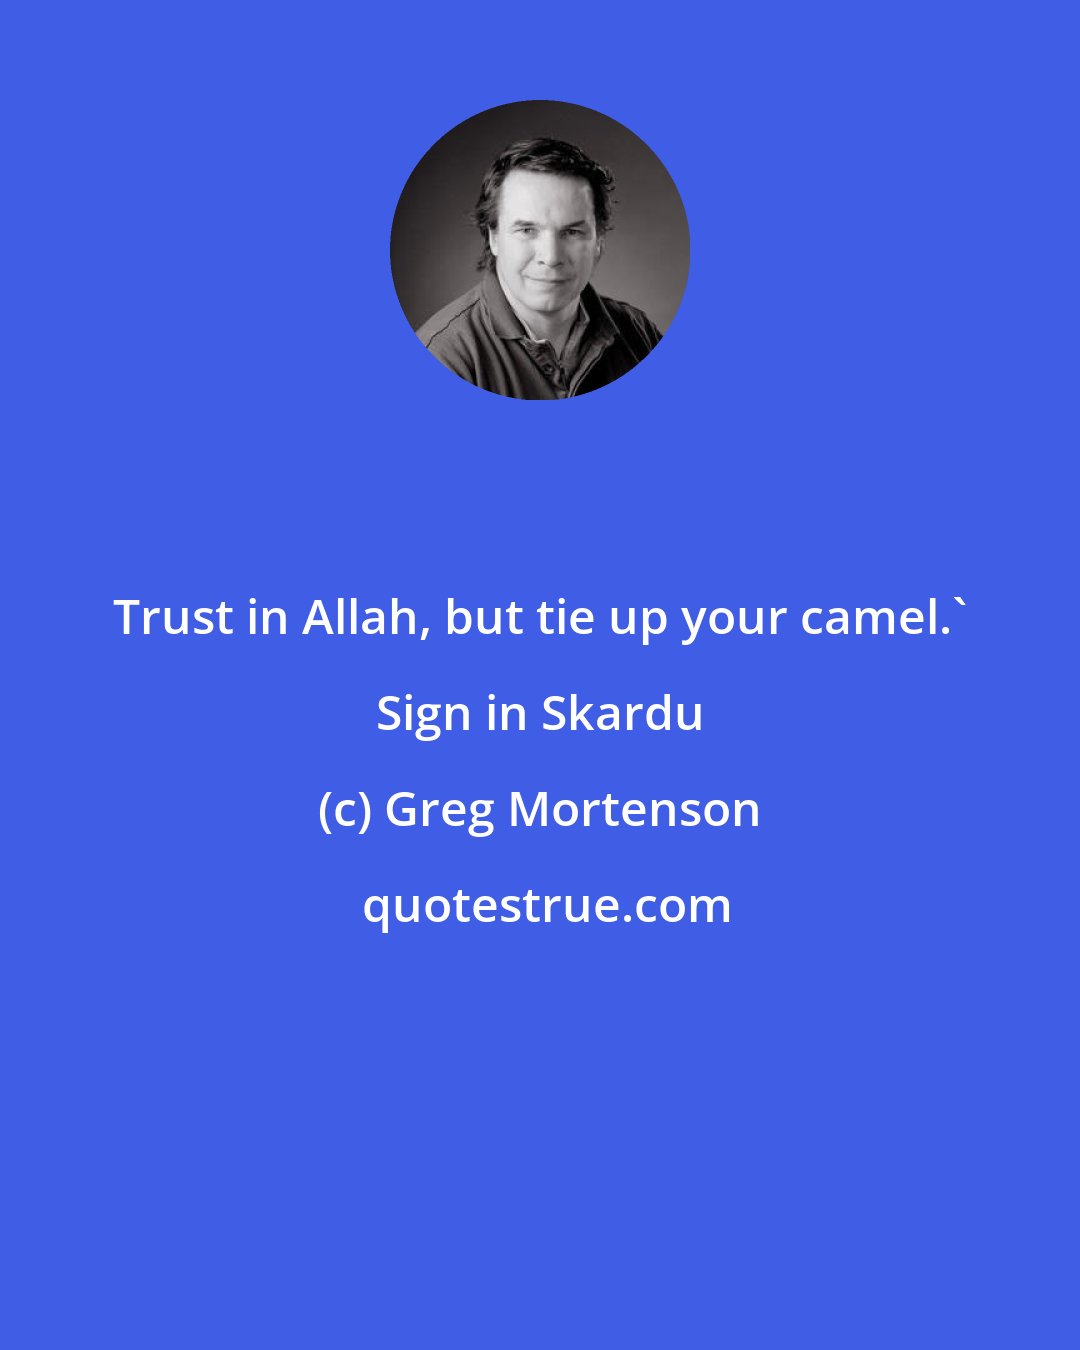 Greg Mortenson: Trust in Allah, but tie up your camel.' Sign in Skardu